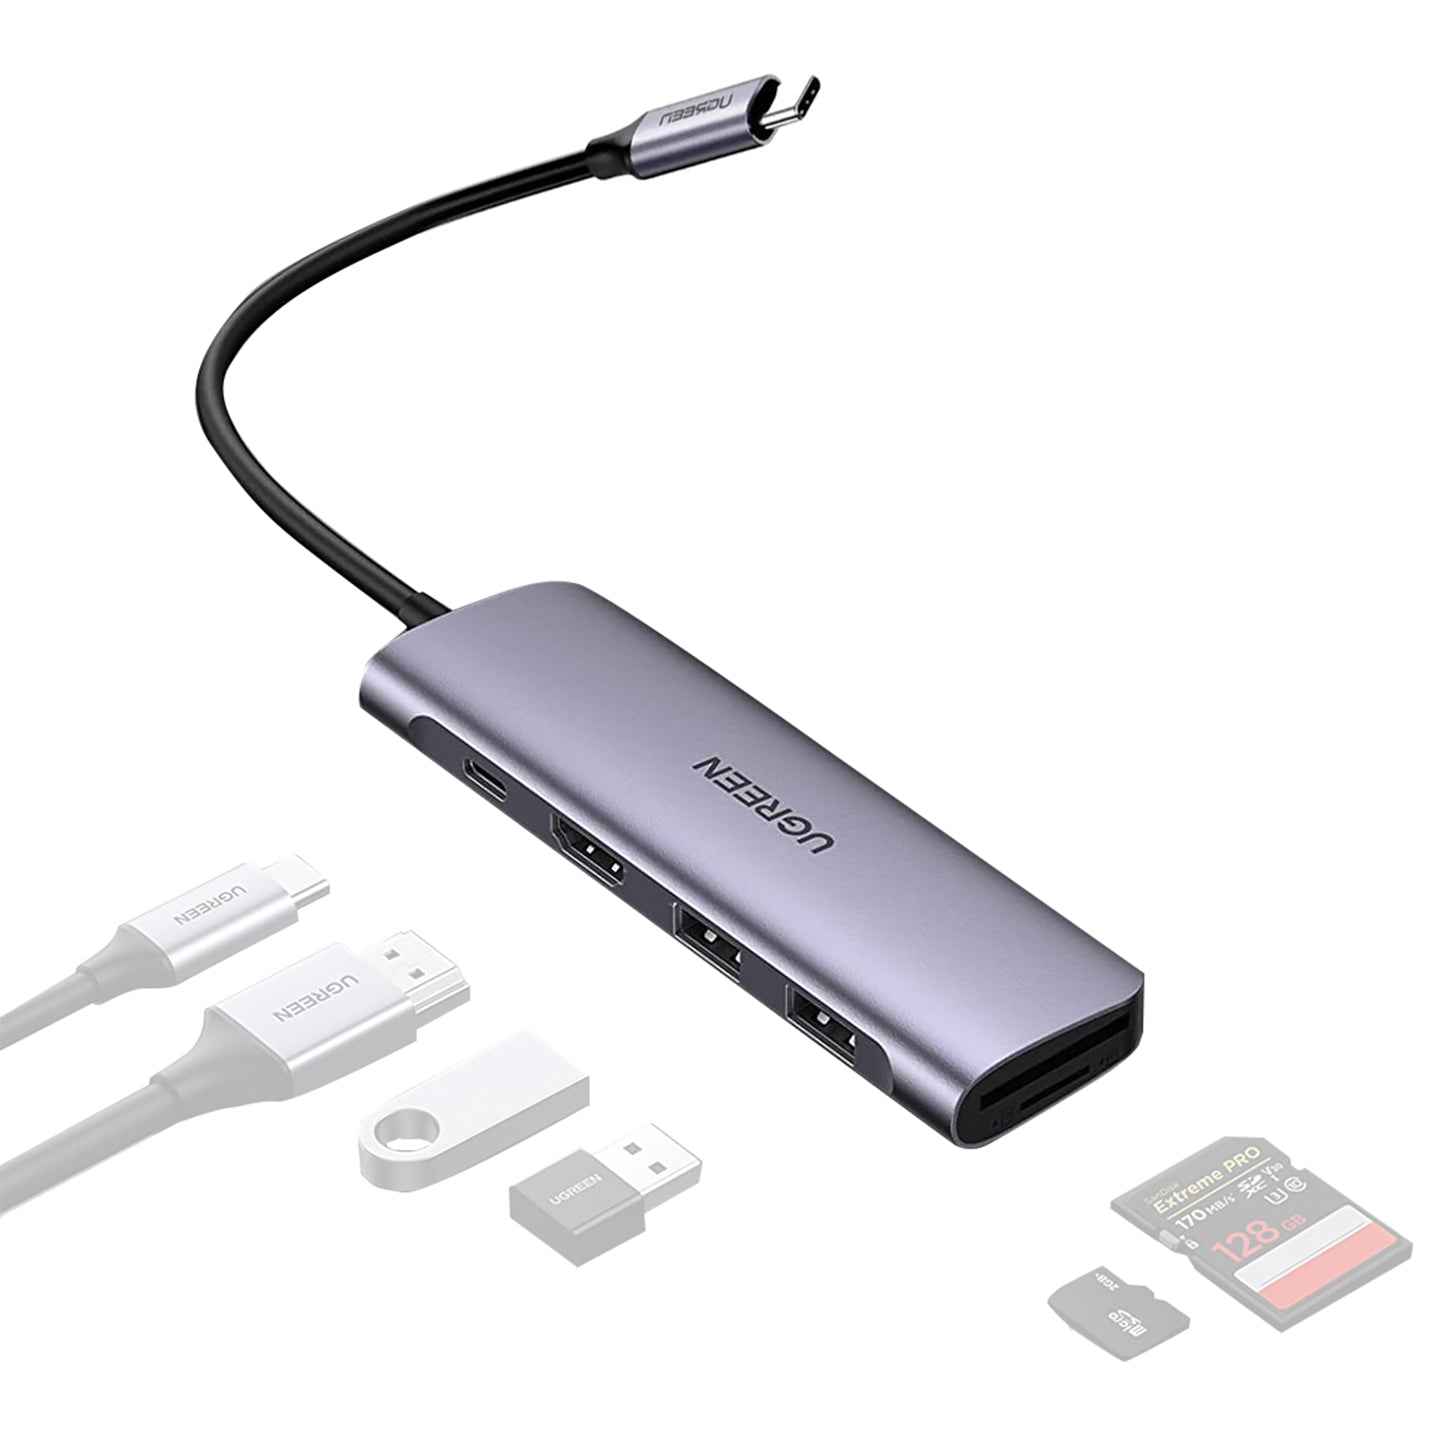  USB C HUB, USB C Adapter 6 in 1 with USB 3.0, 4K-HDMI